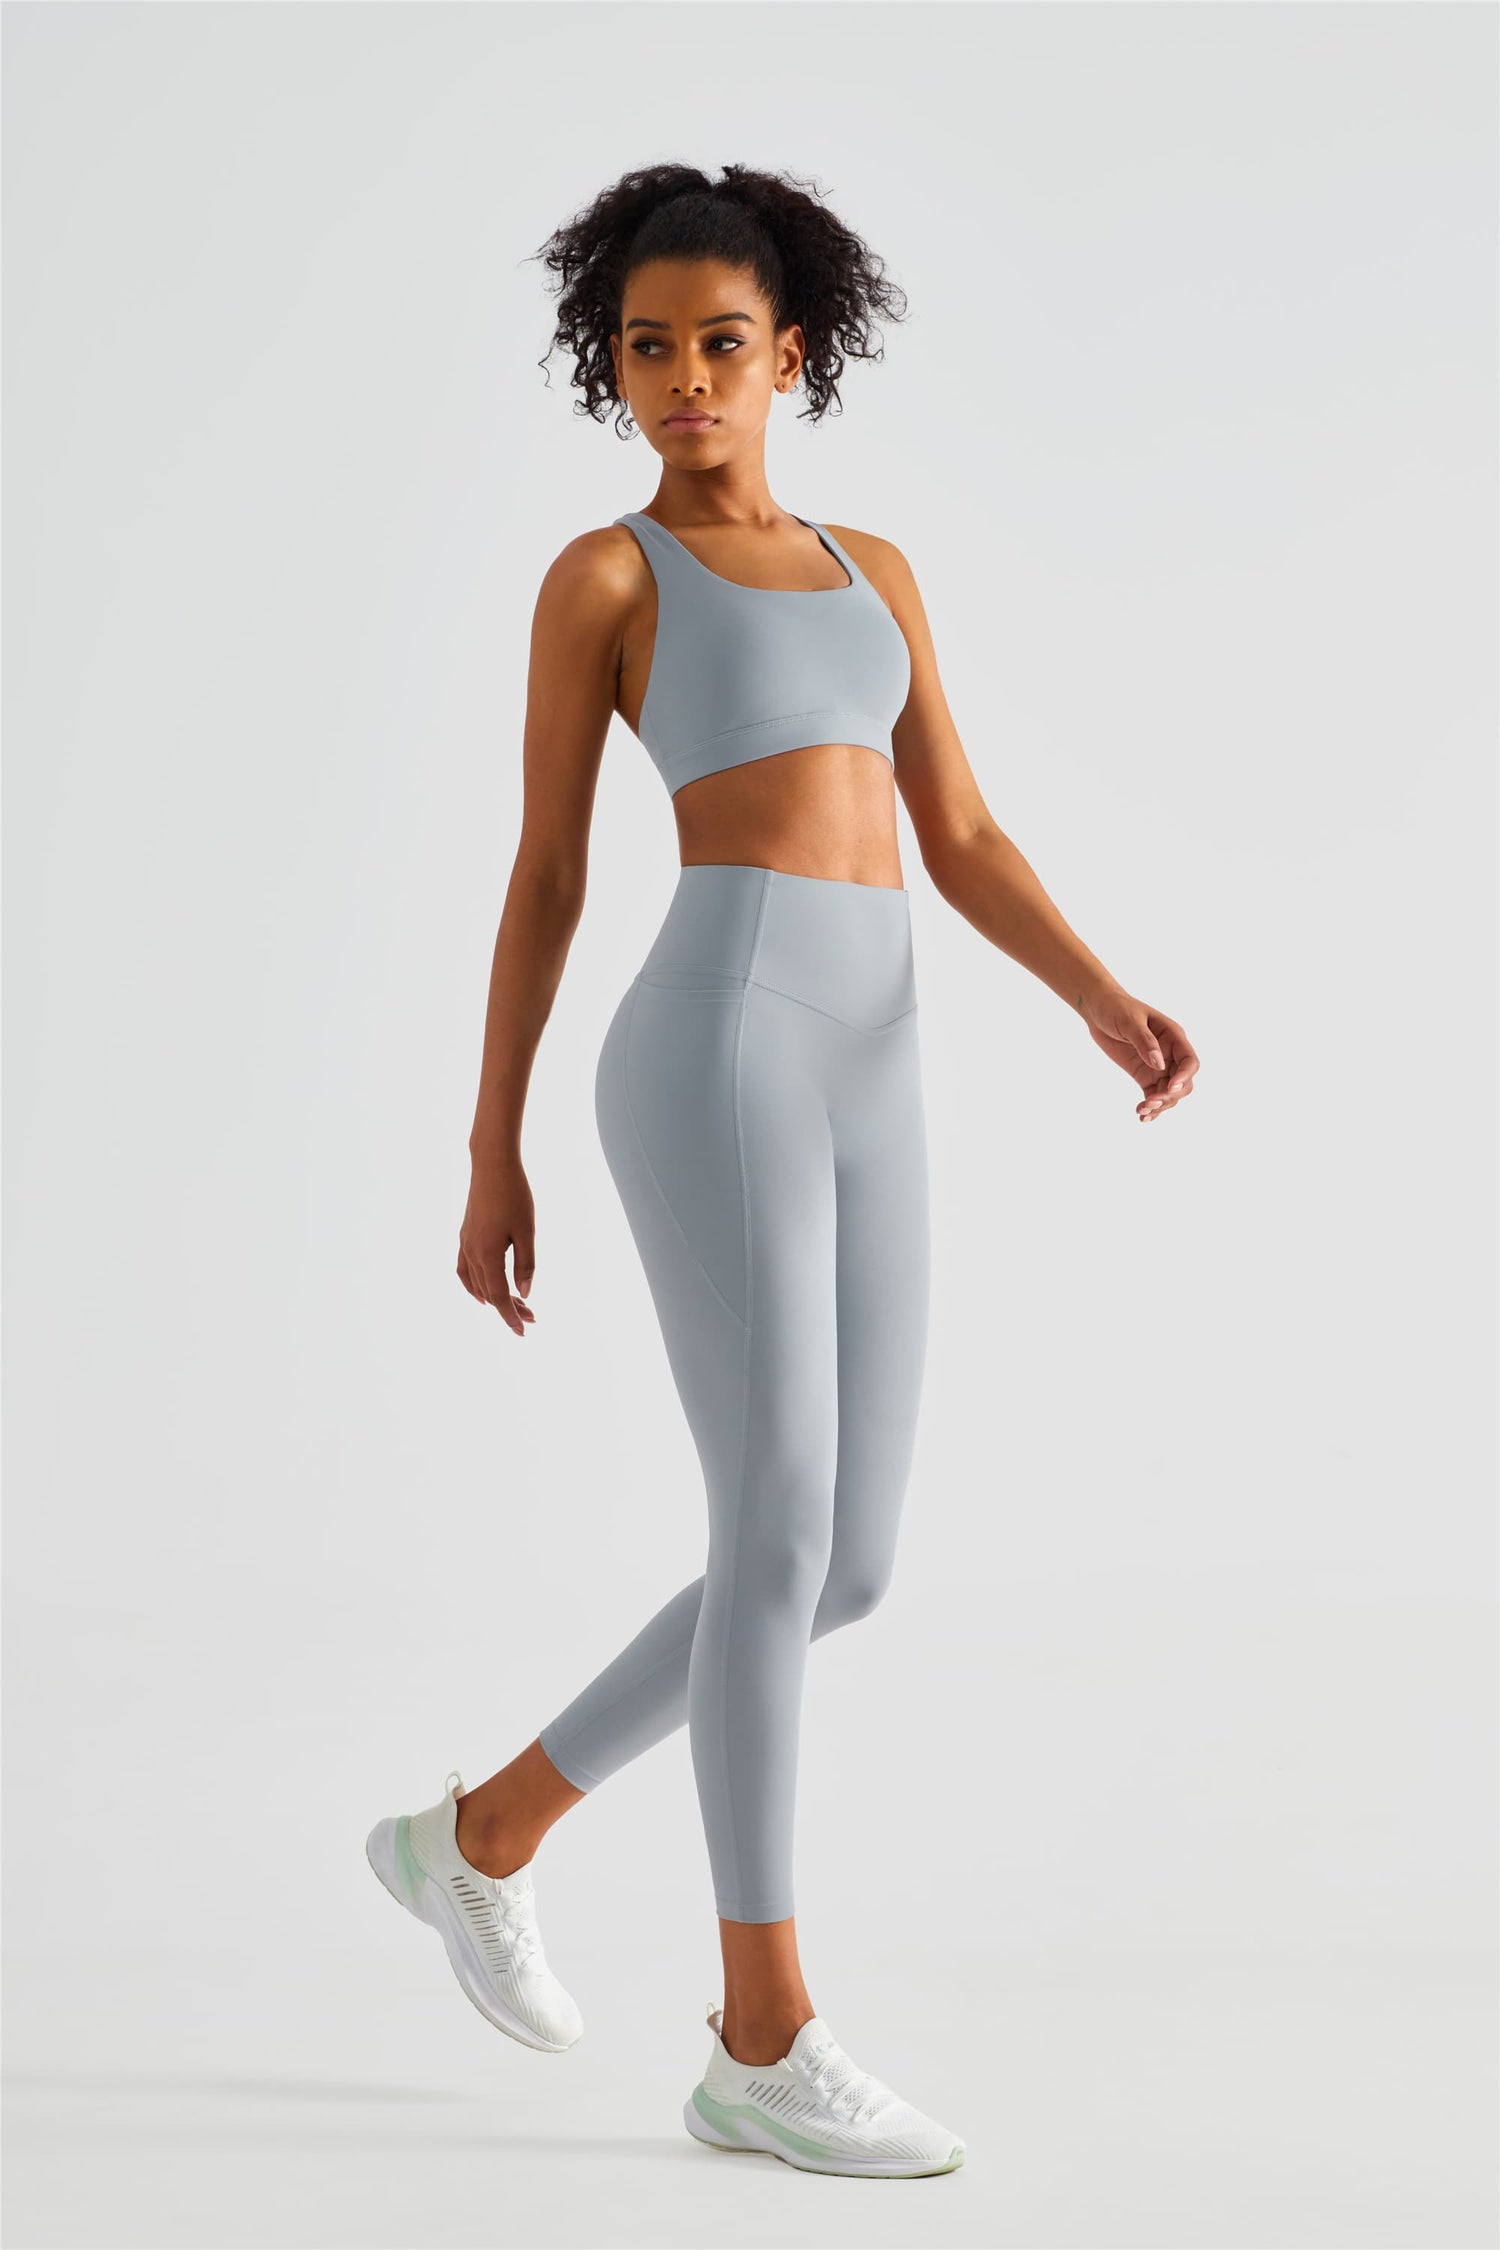 BC PLUS SIZE 3XL Yoga Pant Women Sports Fitness Legging Fast Dry